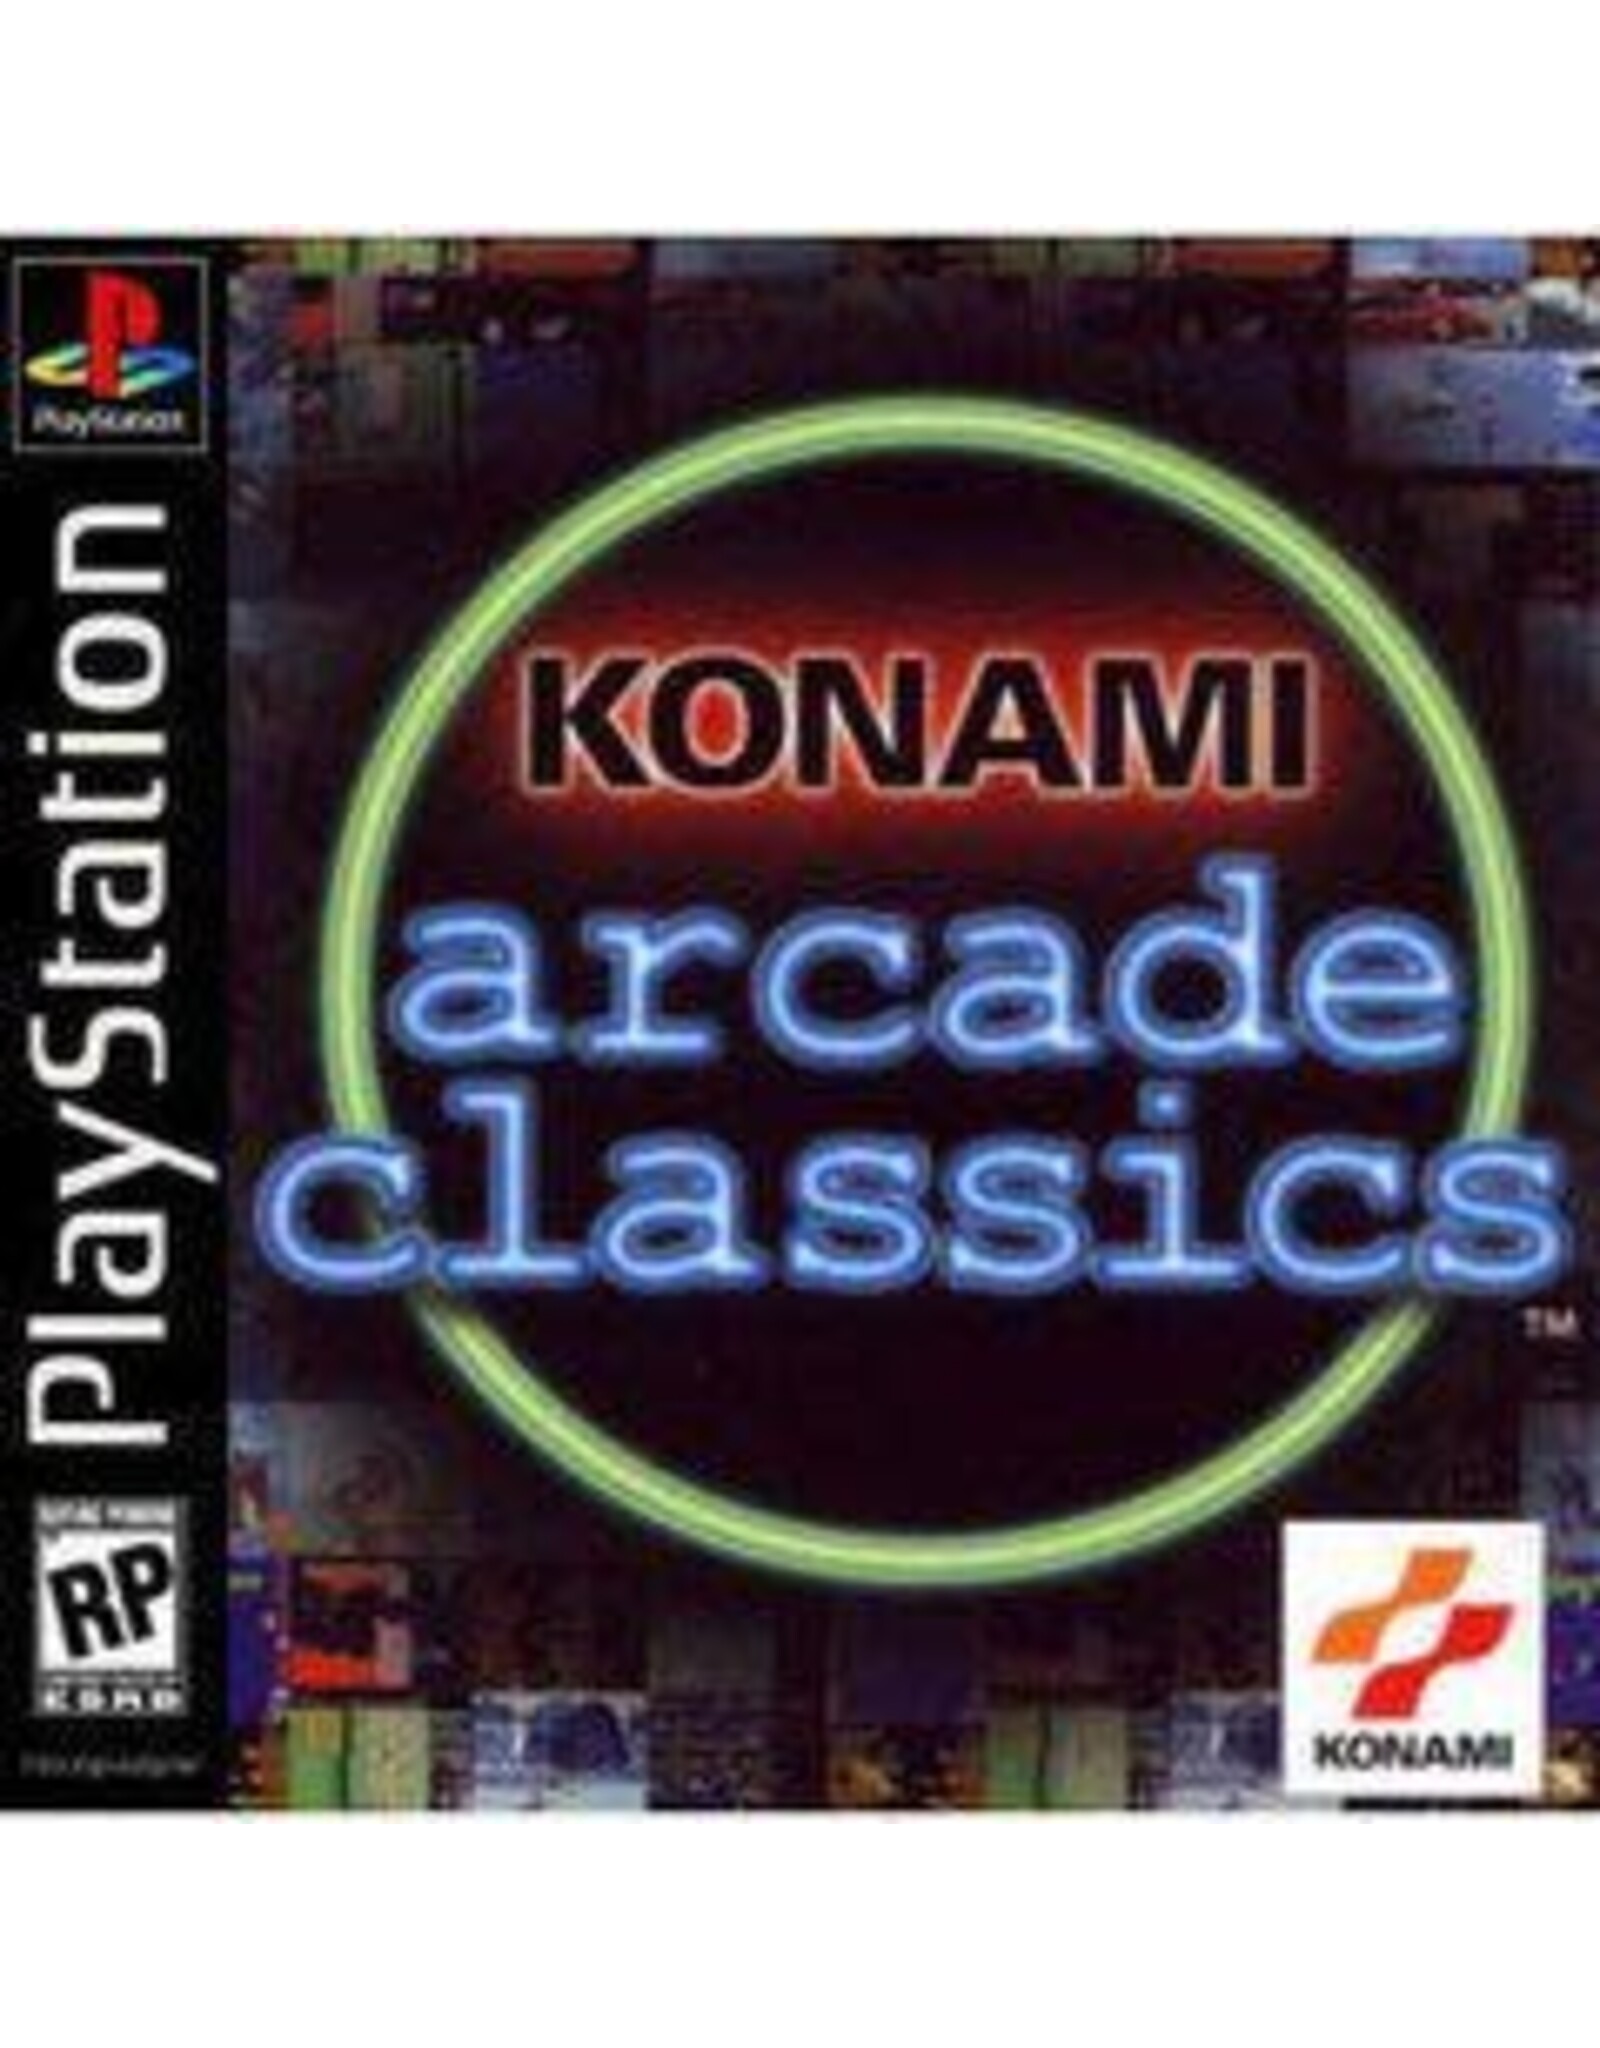 Playstation Konami Arcade Classics (CiB, Stickers on Manual and Disc)